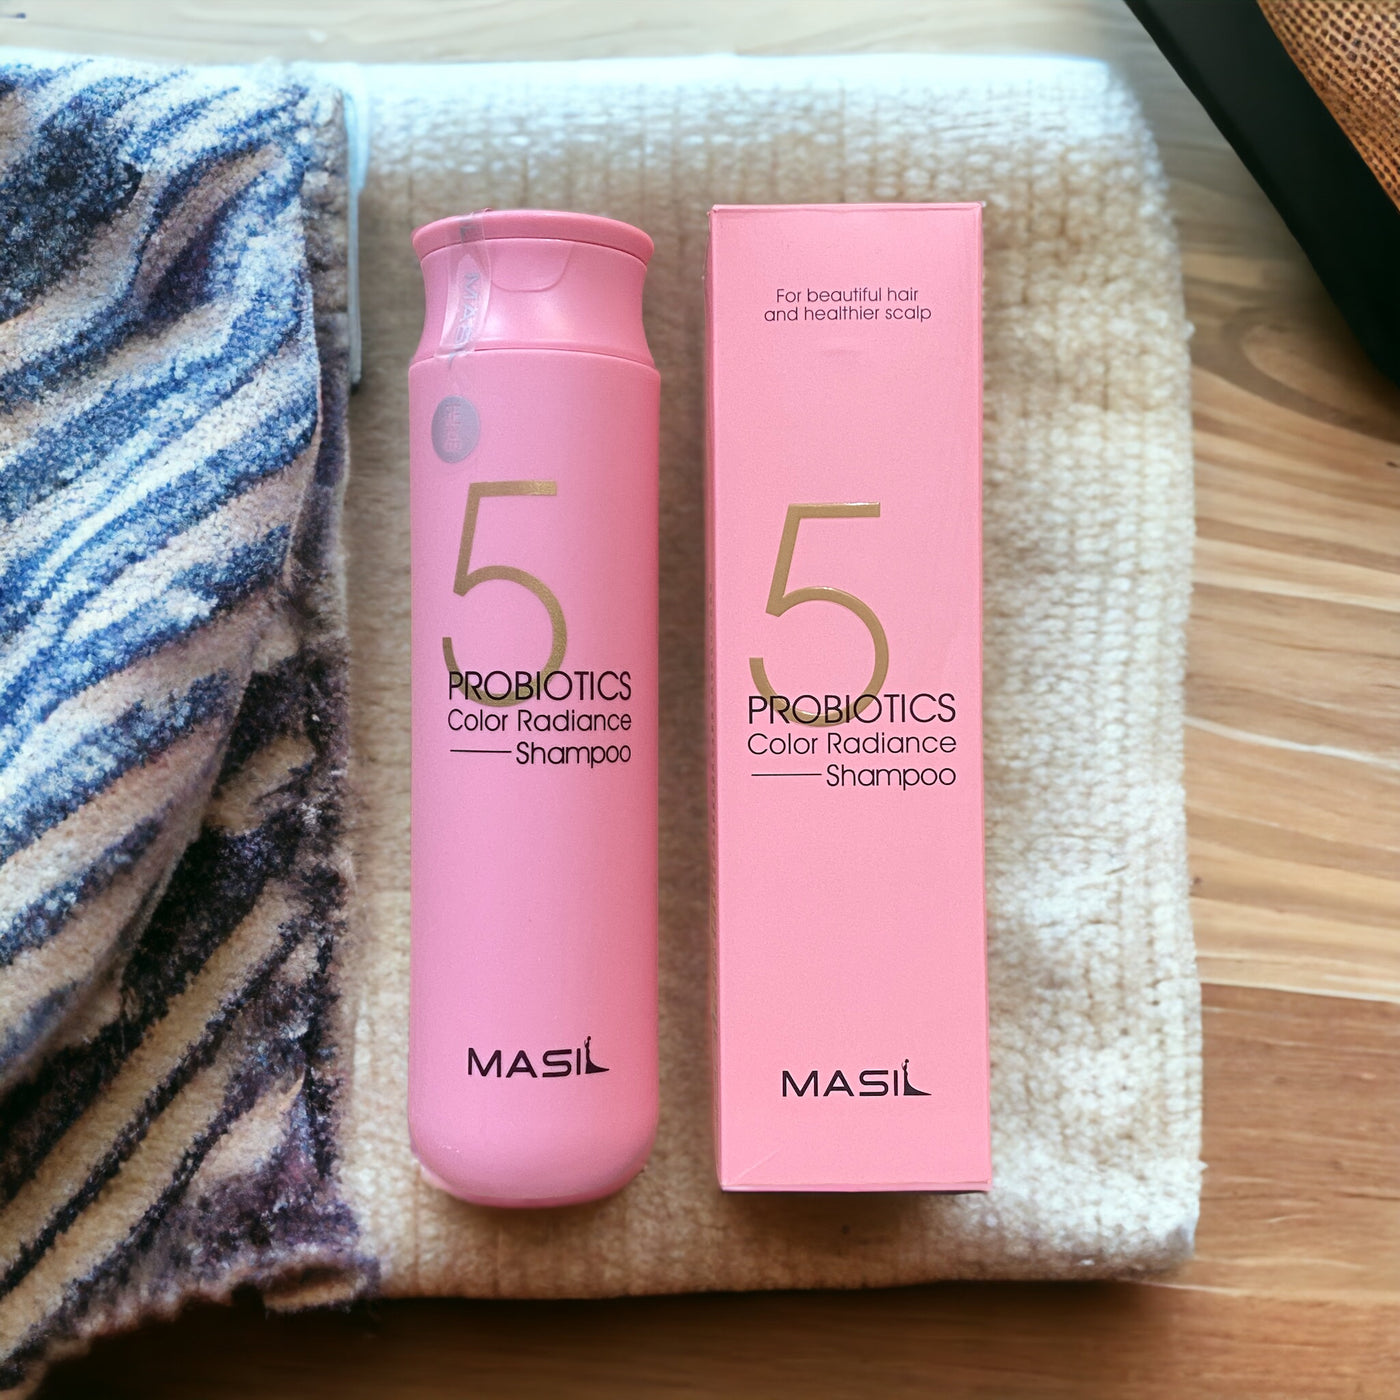 MASIL 5 PROBIOTICS Color Radiance Shampoo